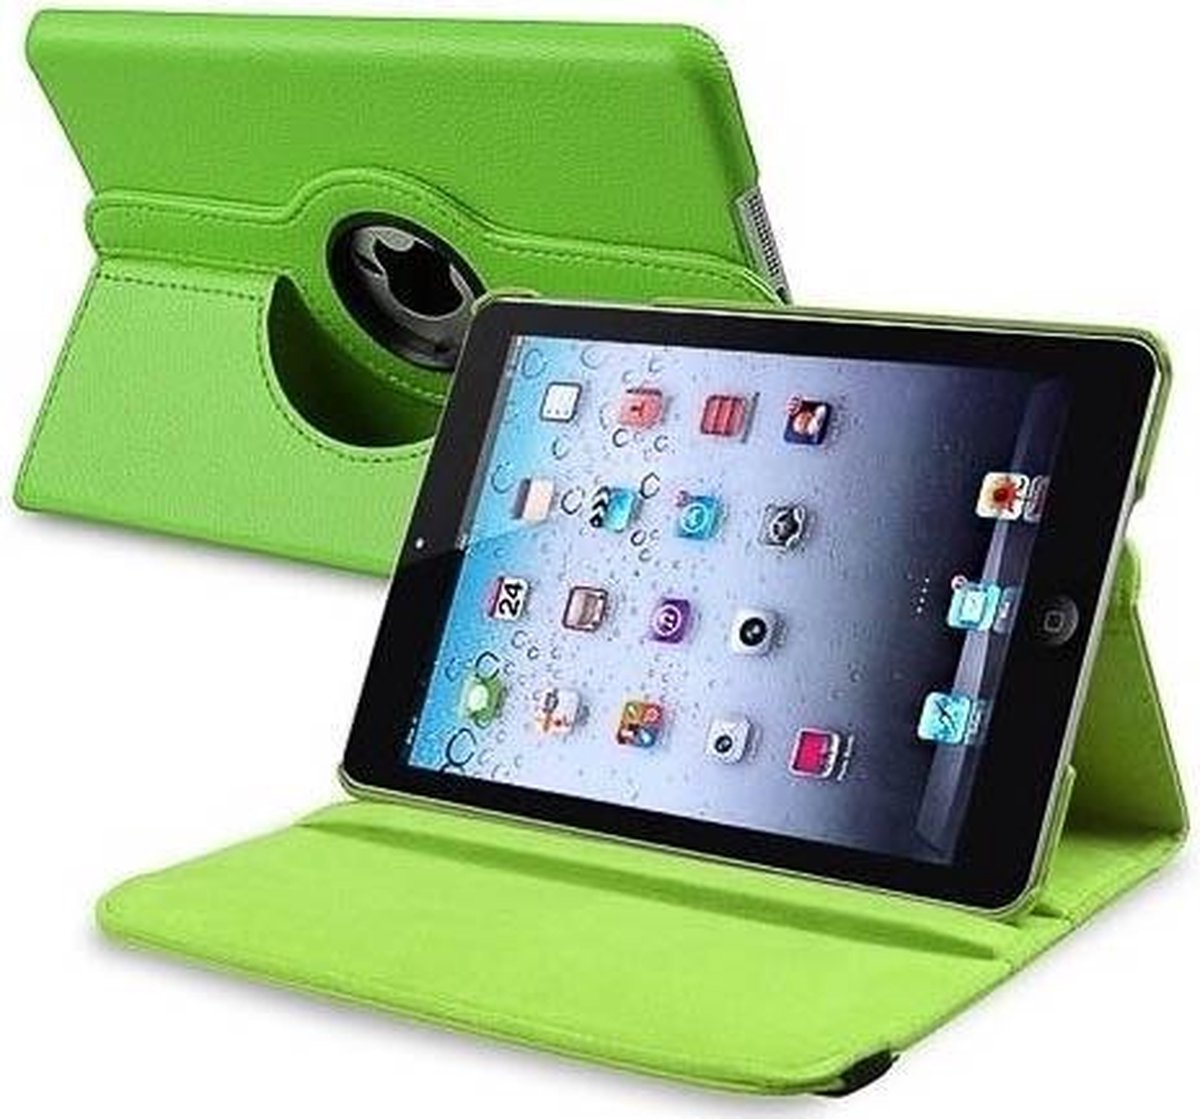 Apple iPad Mini 1, 2, 3 Leather 360 Degree Rotating Case Sleep Wake Groen / Green